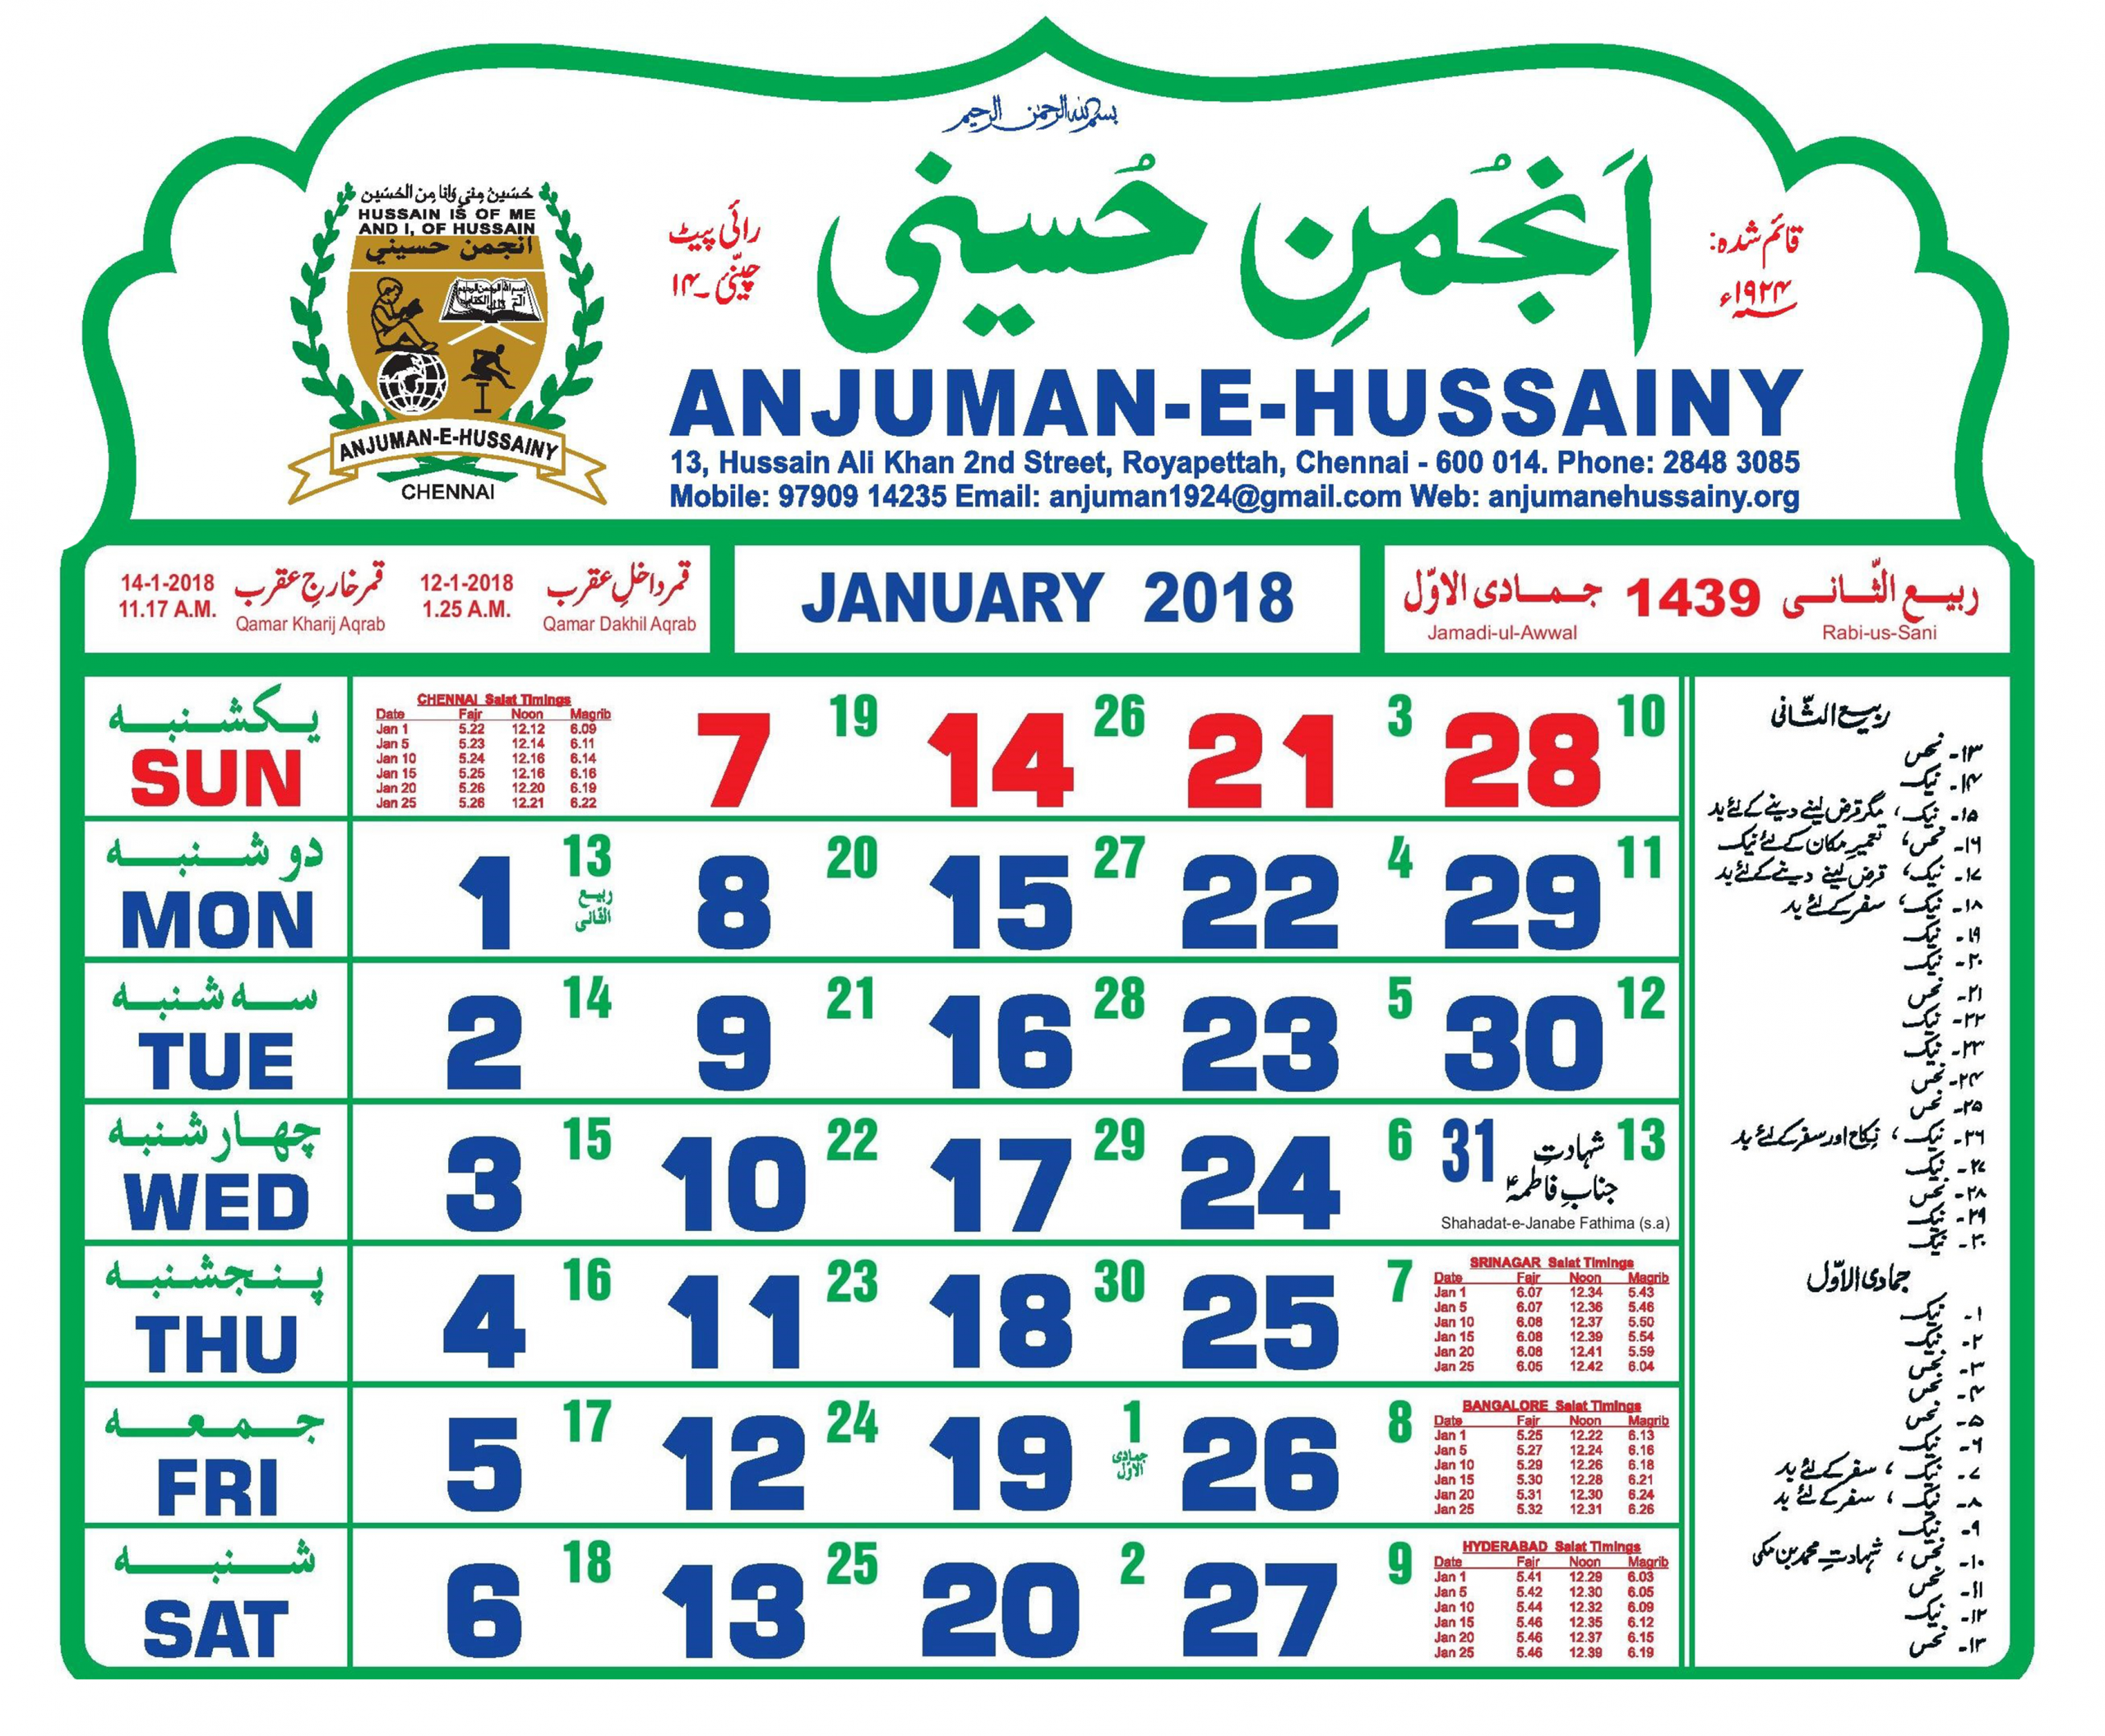 2016 | Anjuman-E-Hussainy